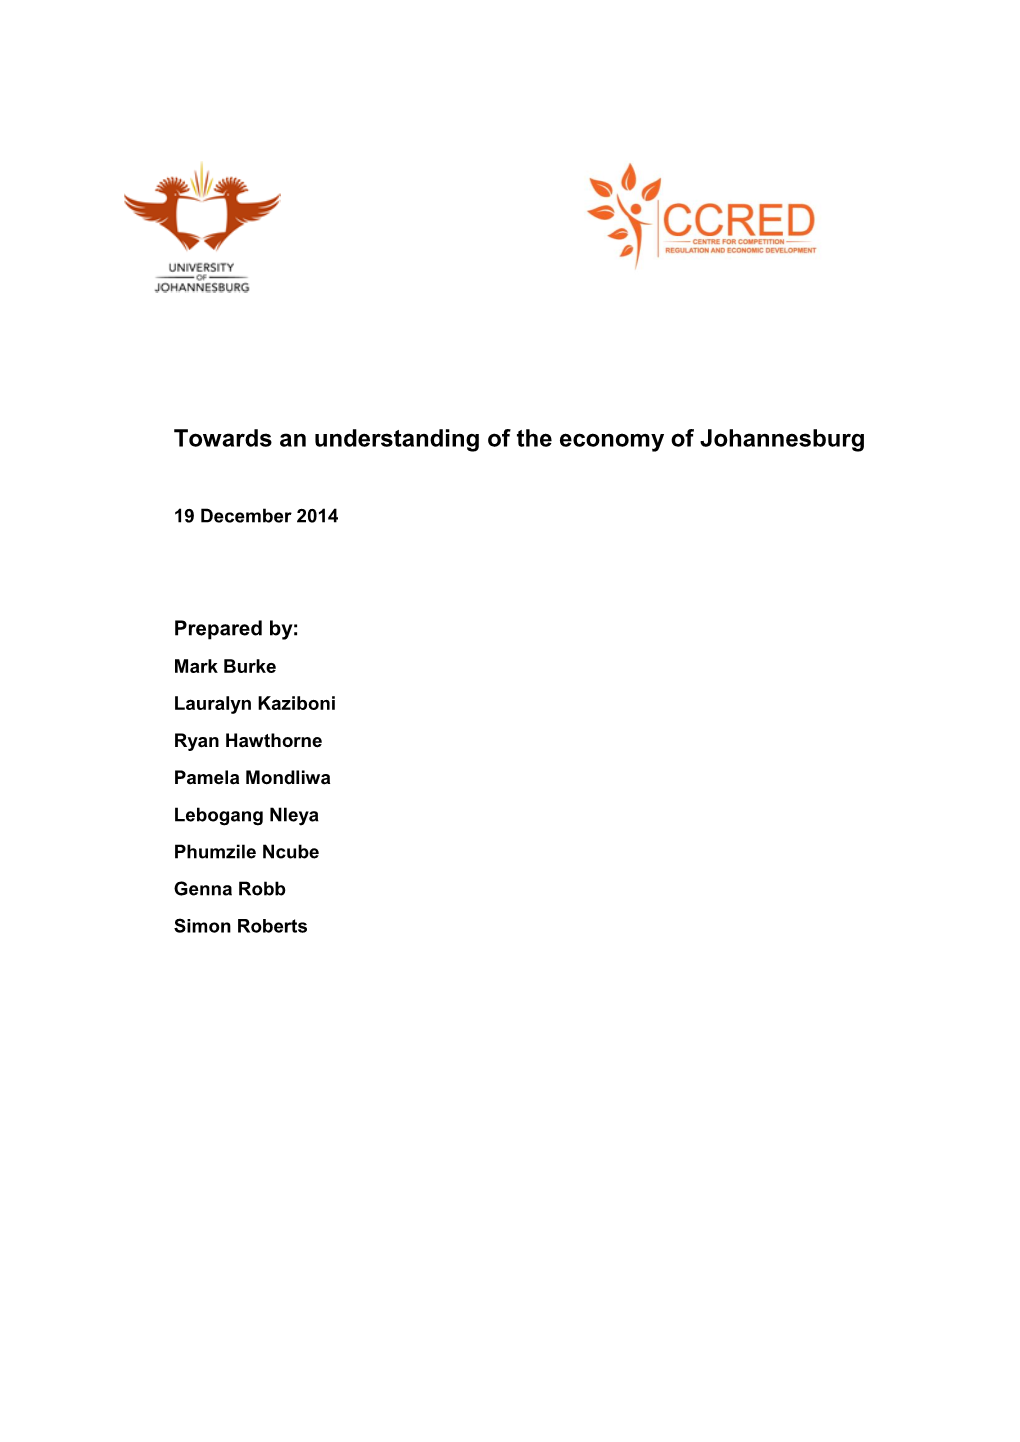 Towards an Understanding of the Economy of Johannesburg